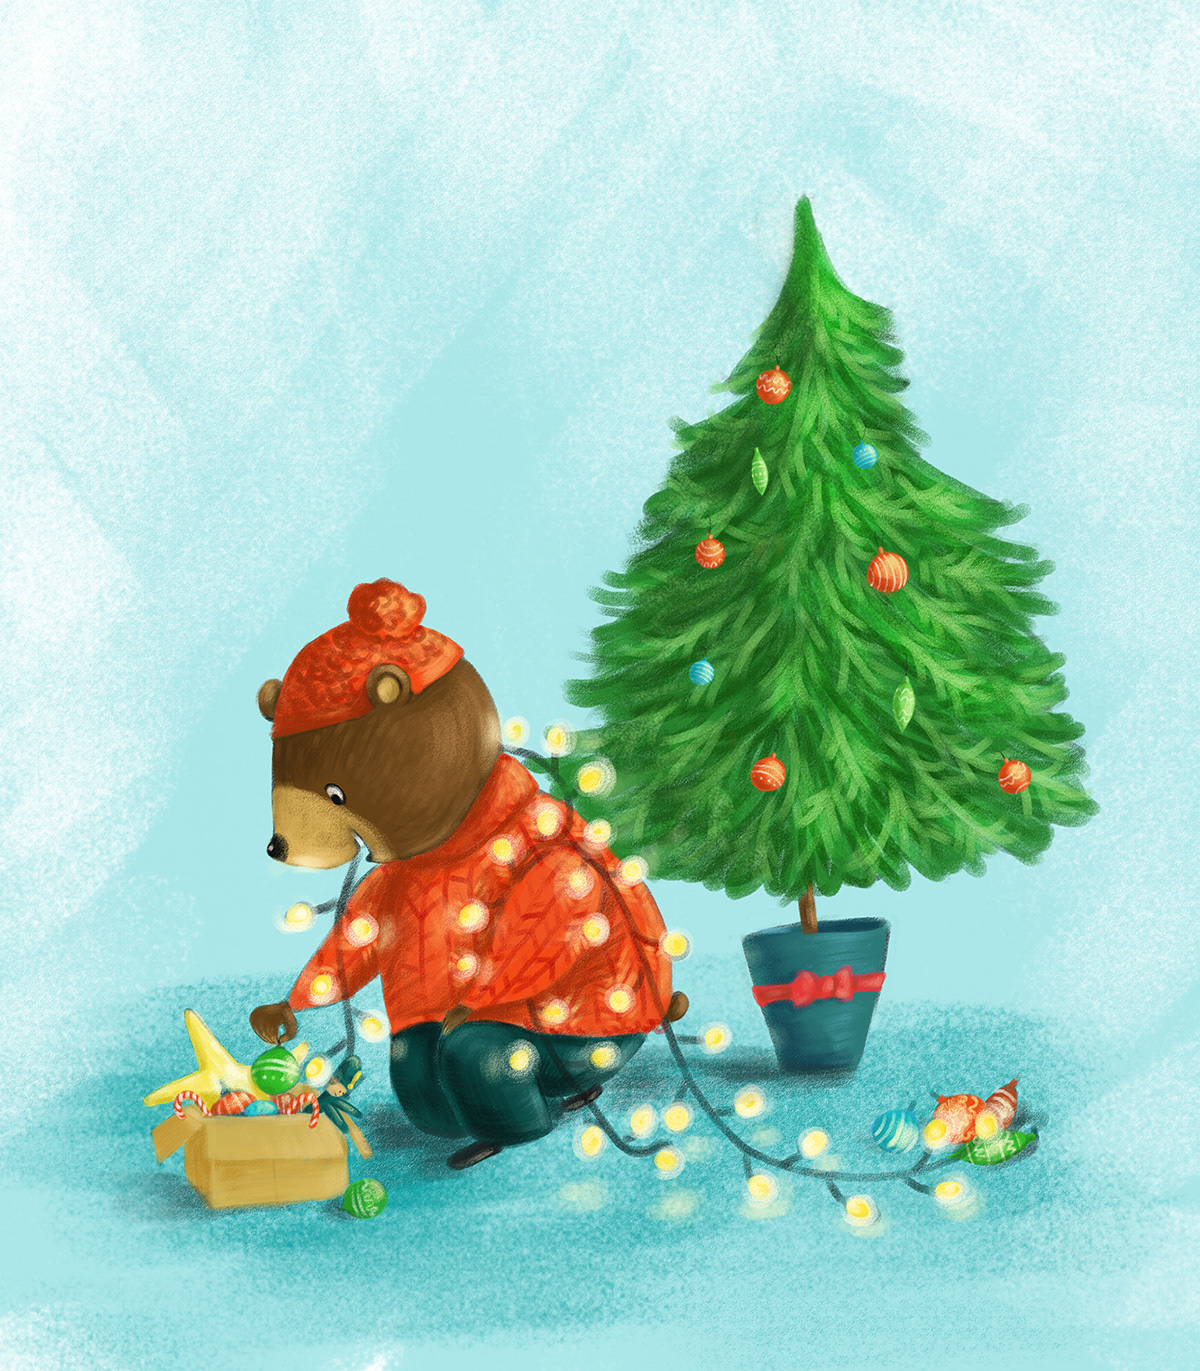 Bear preparing ornaments for the Christmas tree.